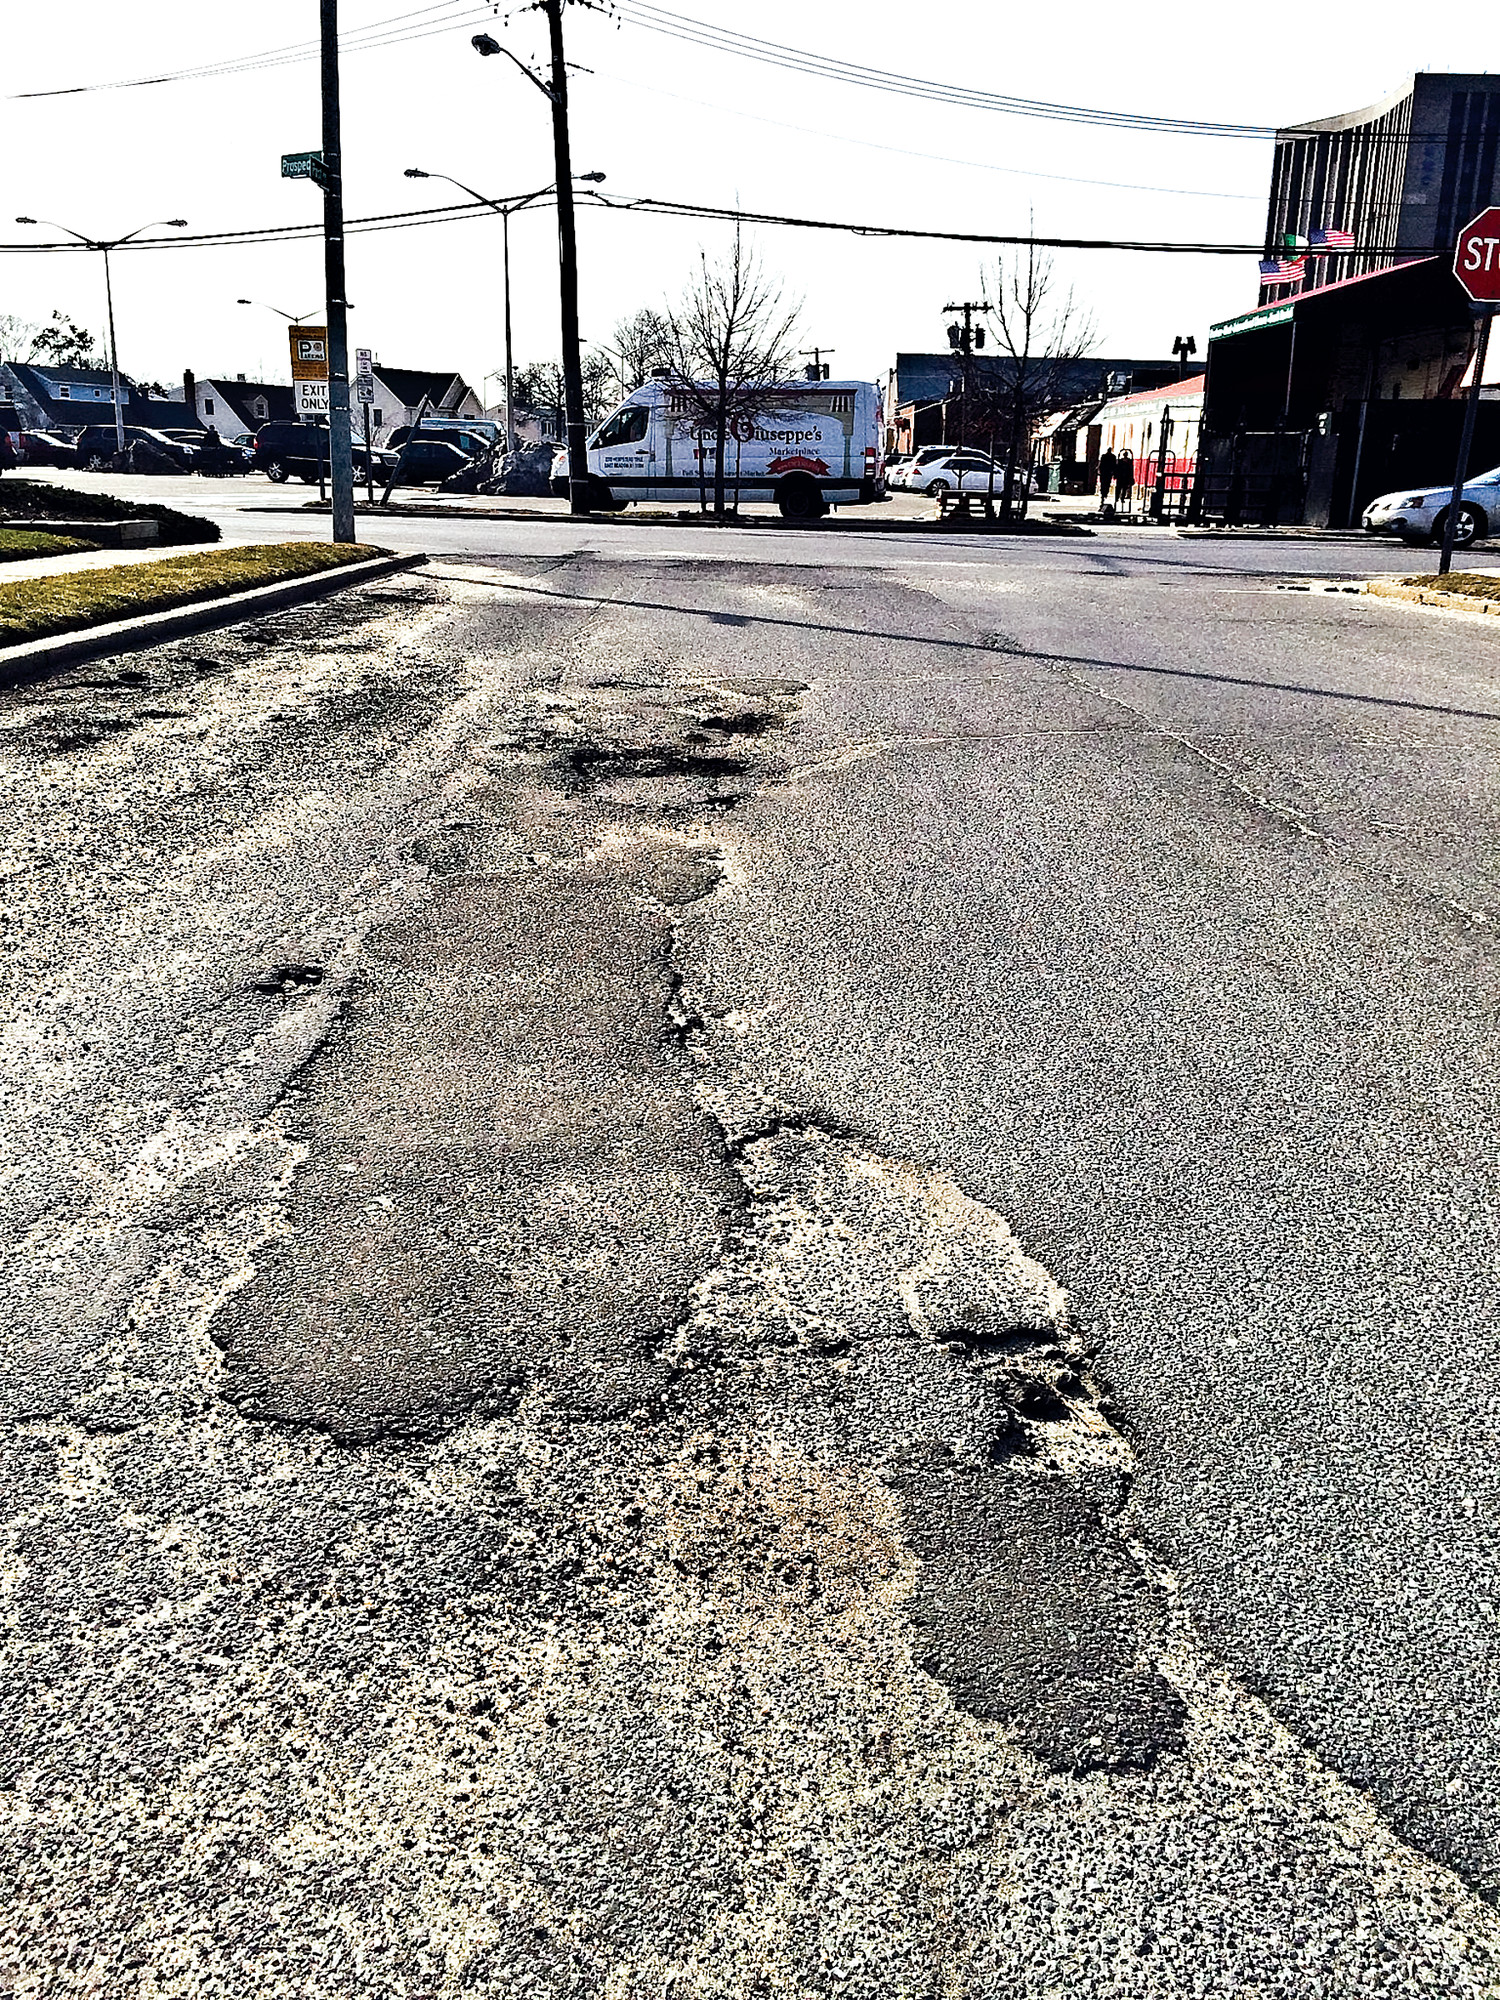 A recently filled pothole on Post Street, off Prospect Avenue.